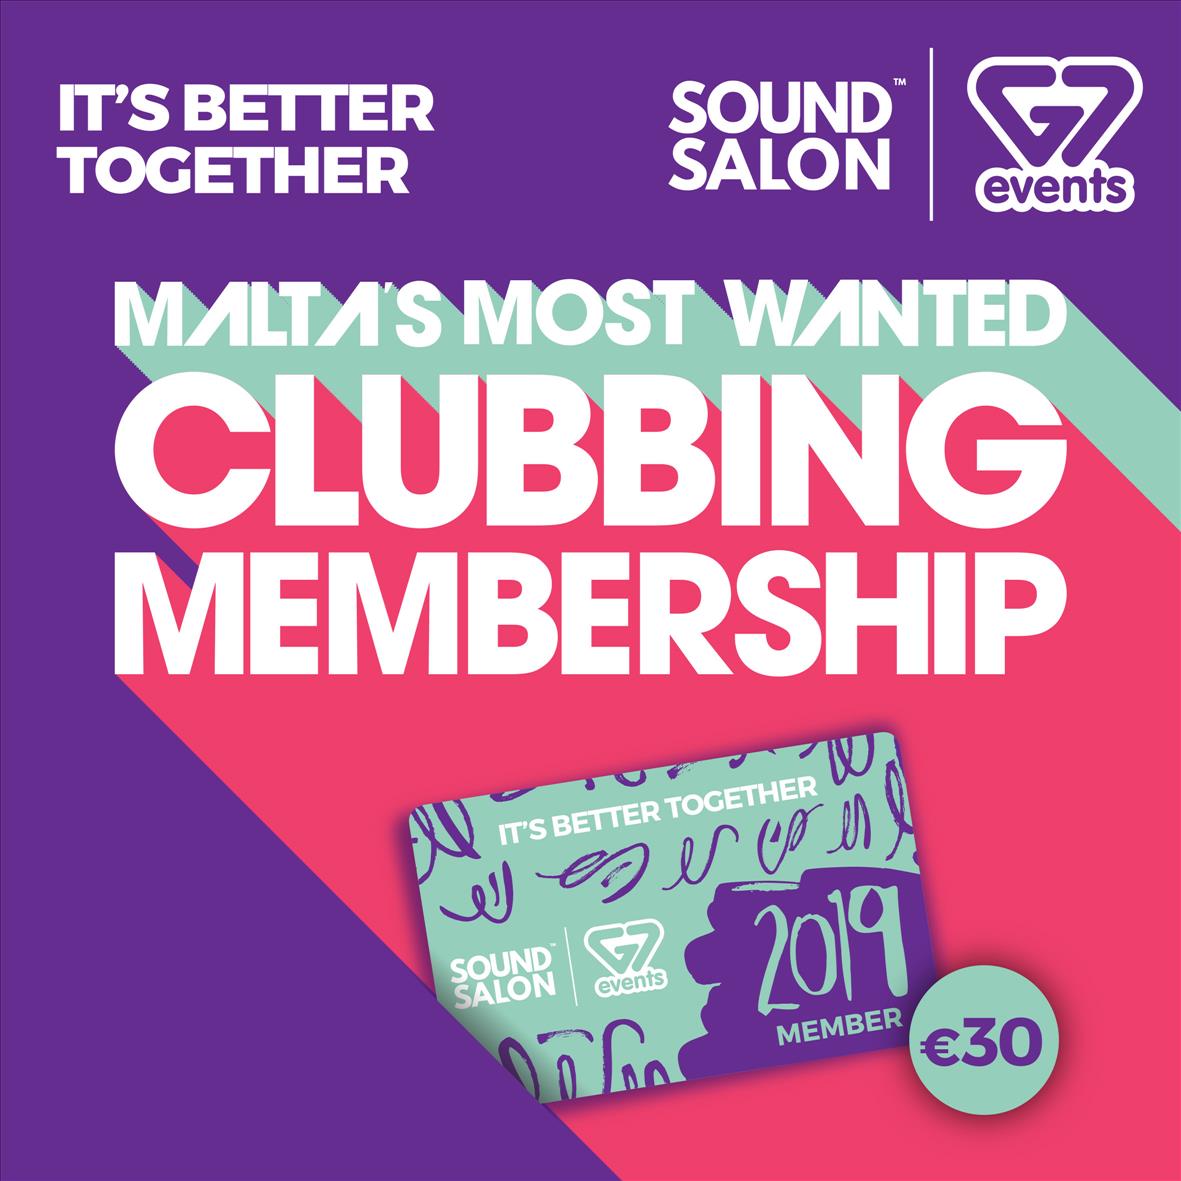 G7 Events & Sound Salon - 2019 Membership Card poster